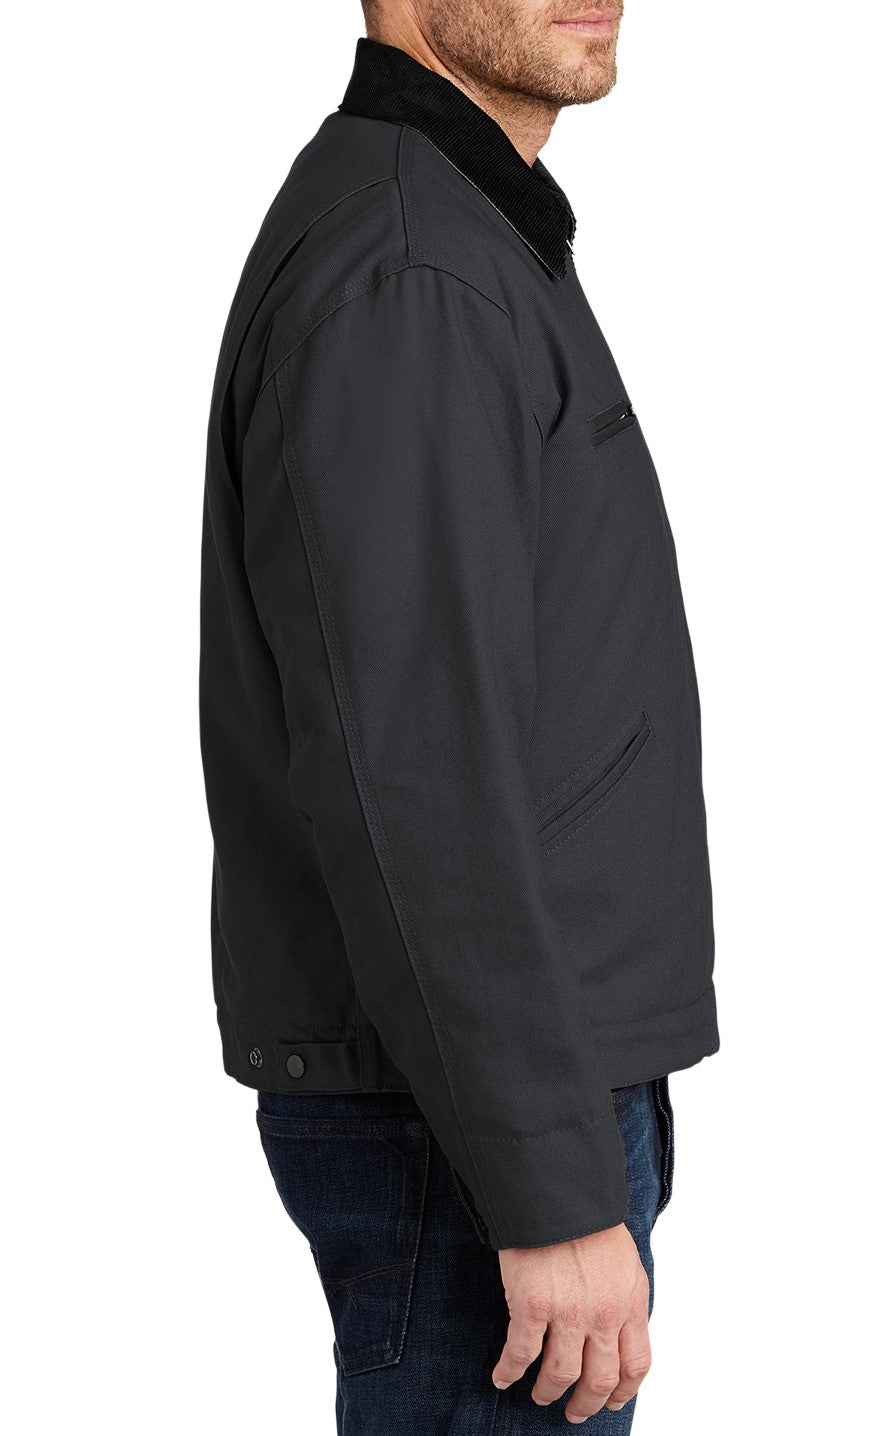 prairie canvas jacket by Flying R Ranchwear in graphite gray